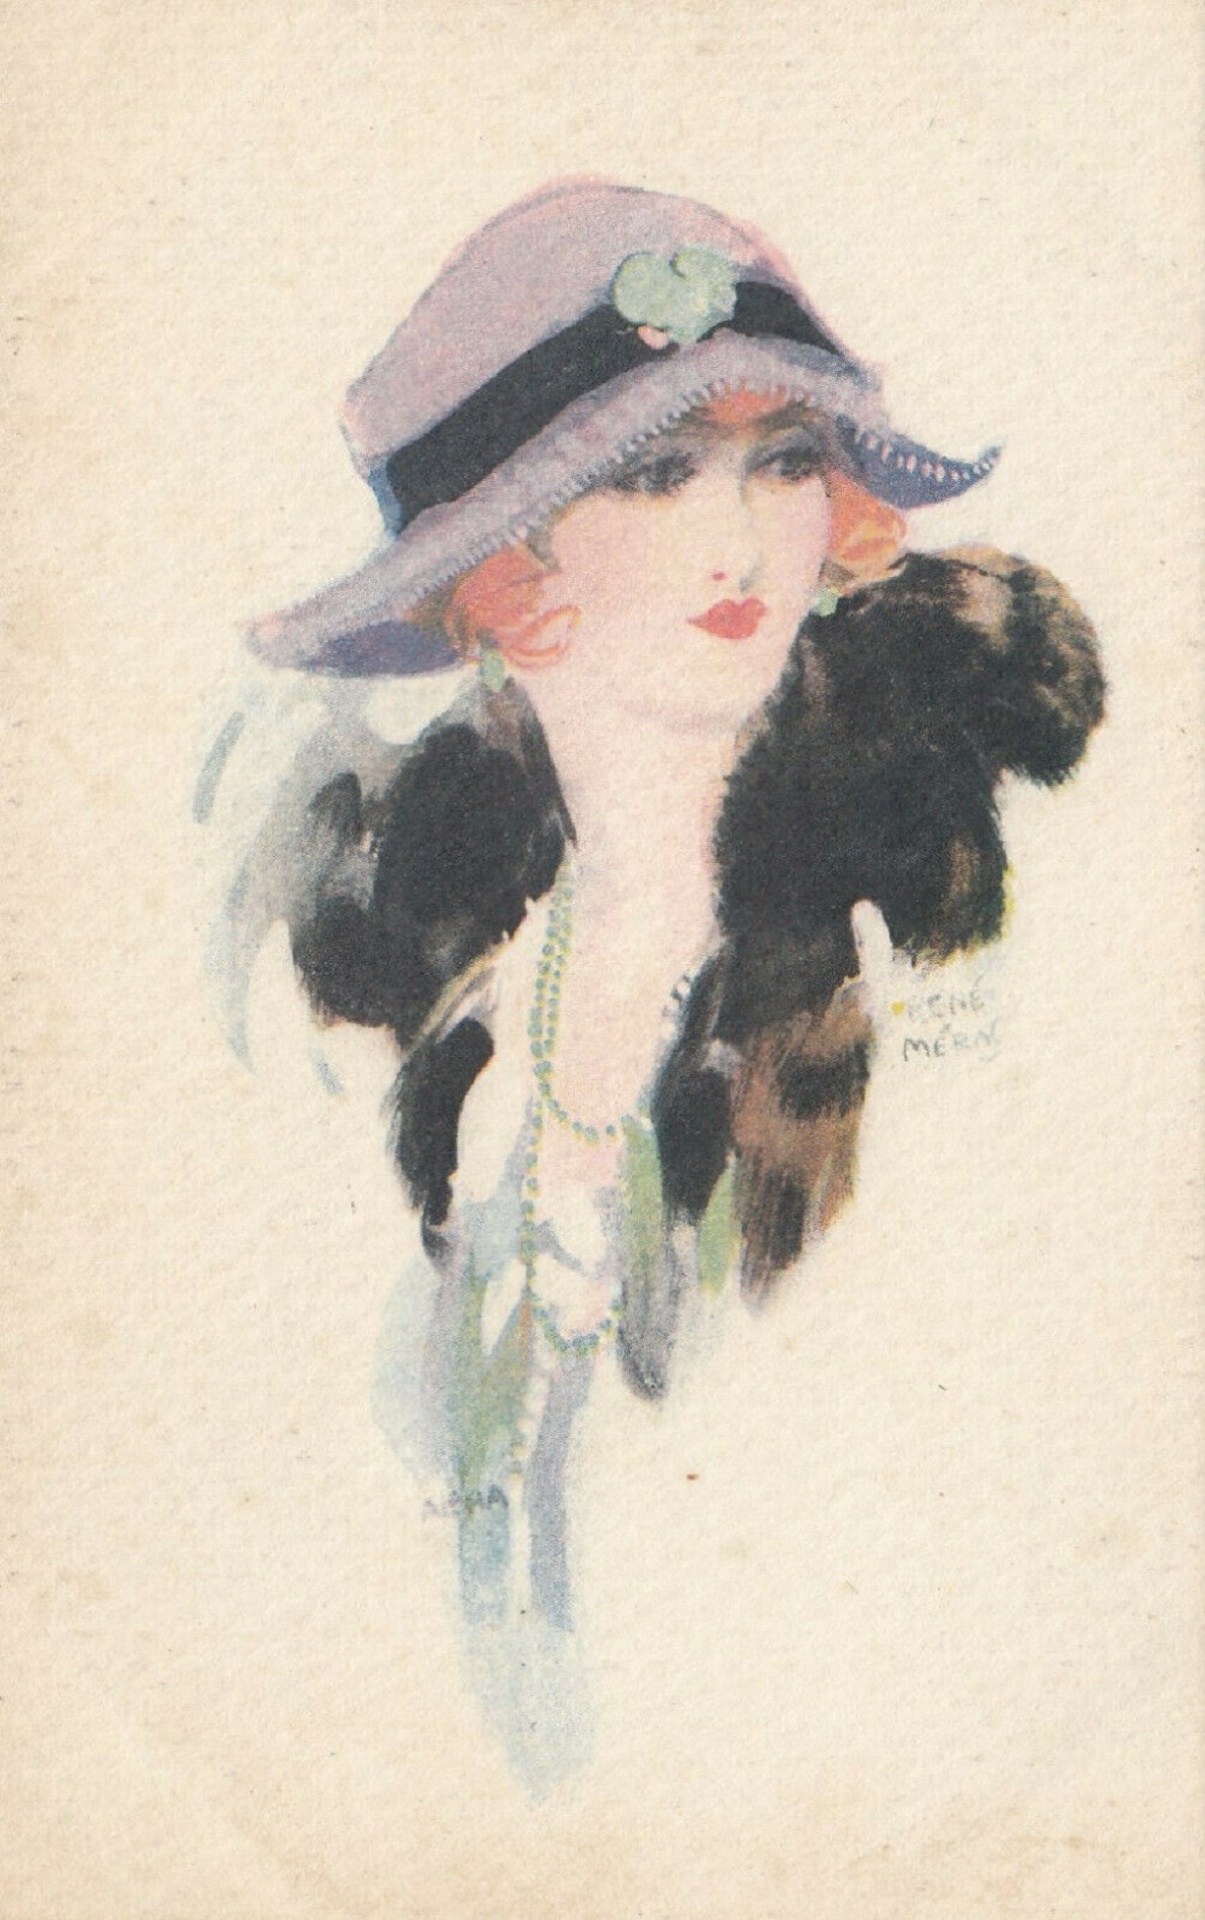 Lady in hat with fur stole artist René Meras ca 1910 public domain